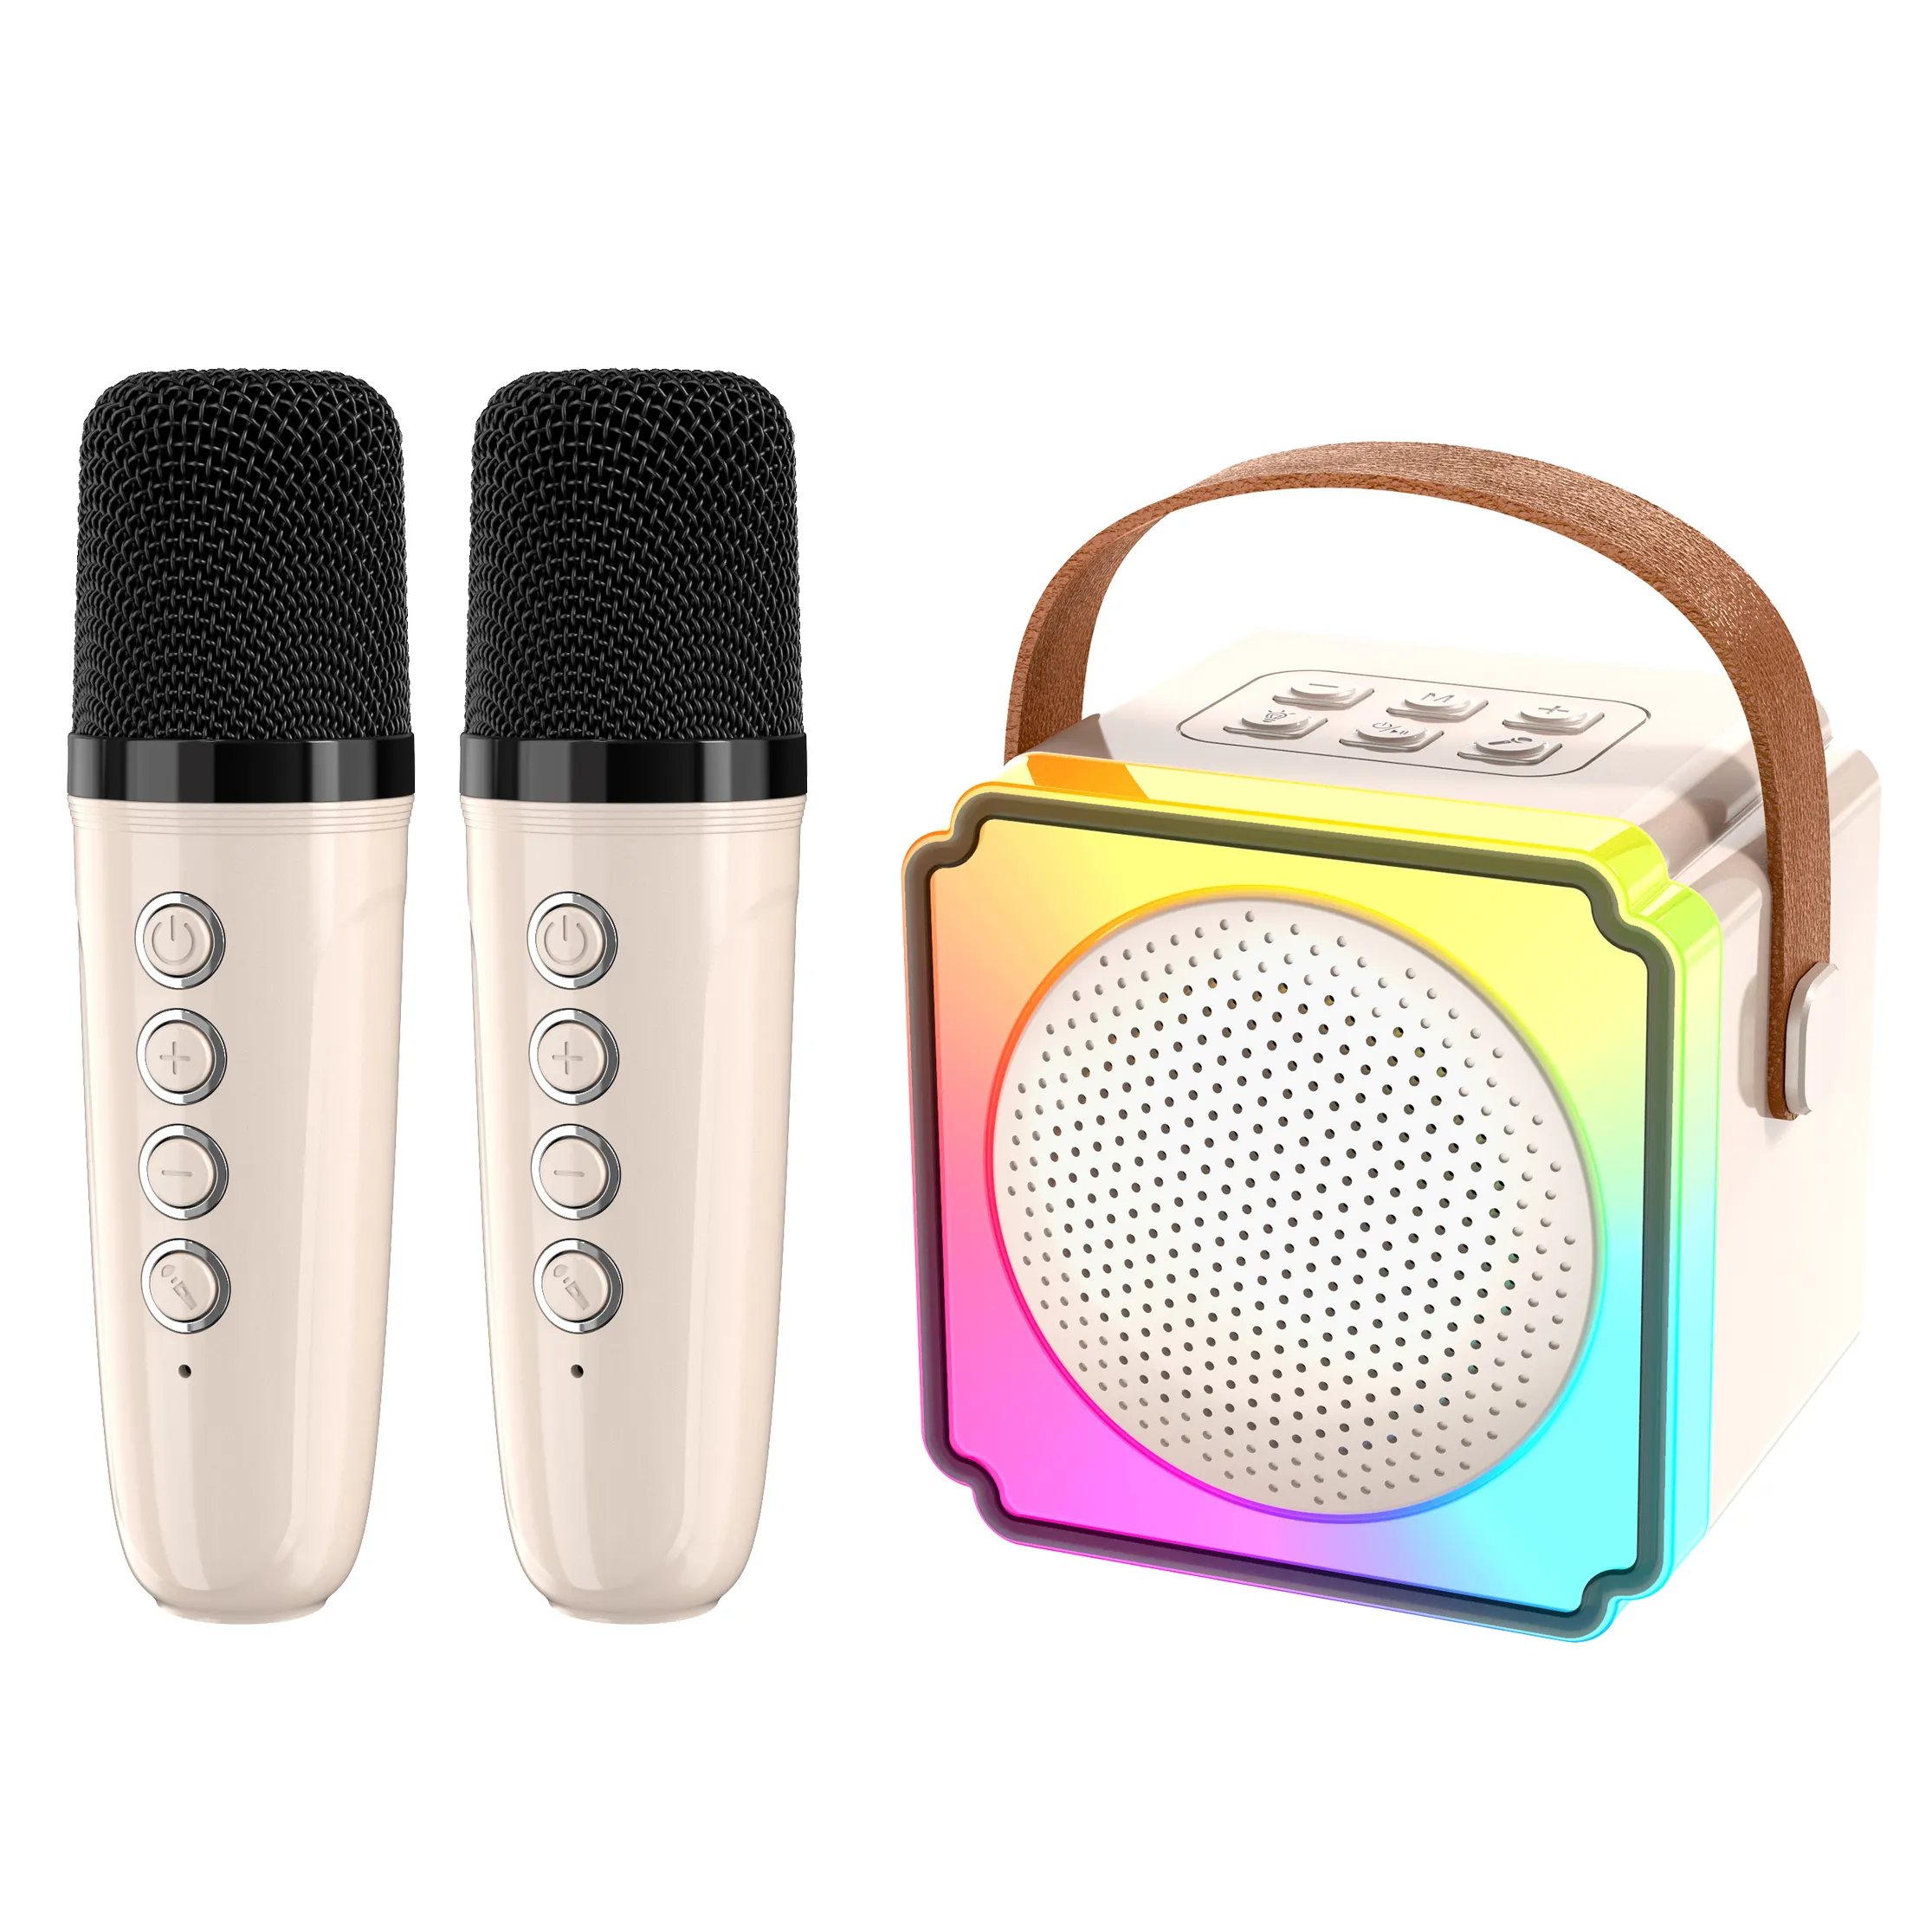 Portable smart music bluetooth boxing home magic interaction speaker brands mini karaoke machine with 2 wireless microphones